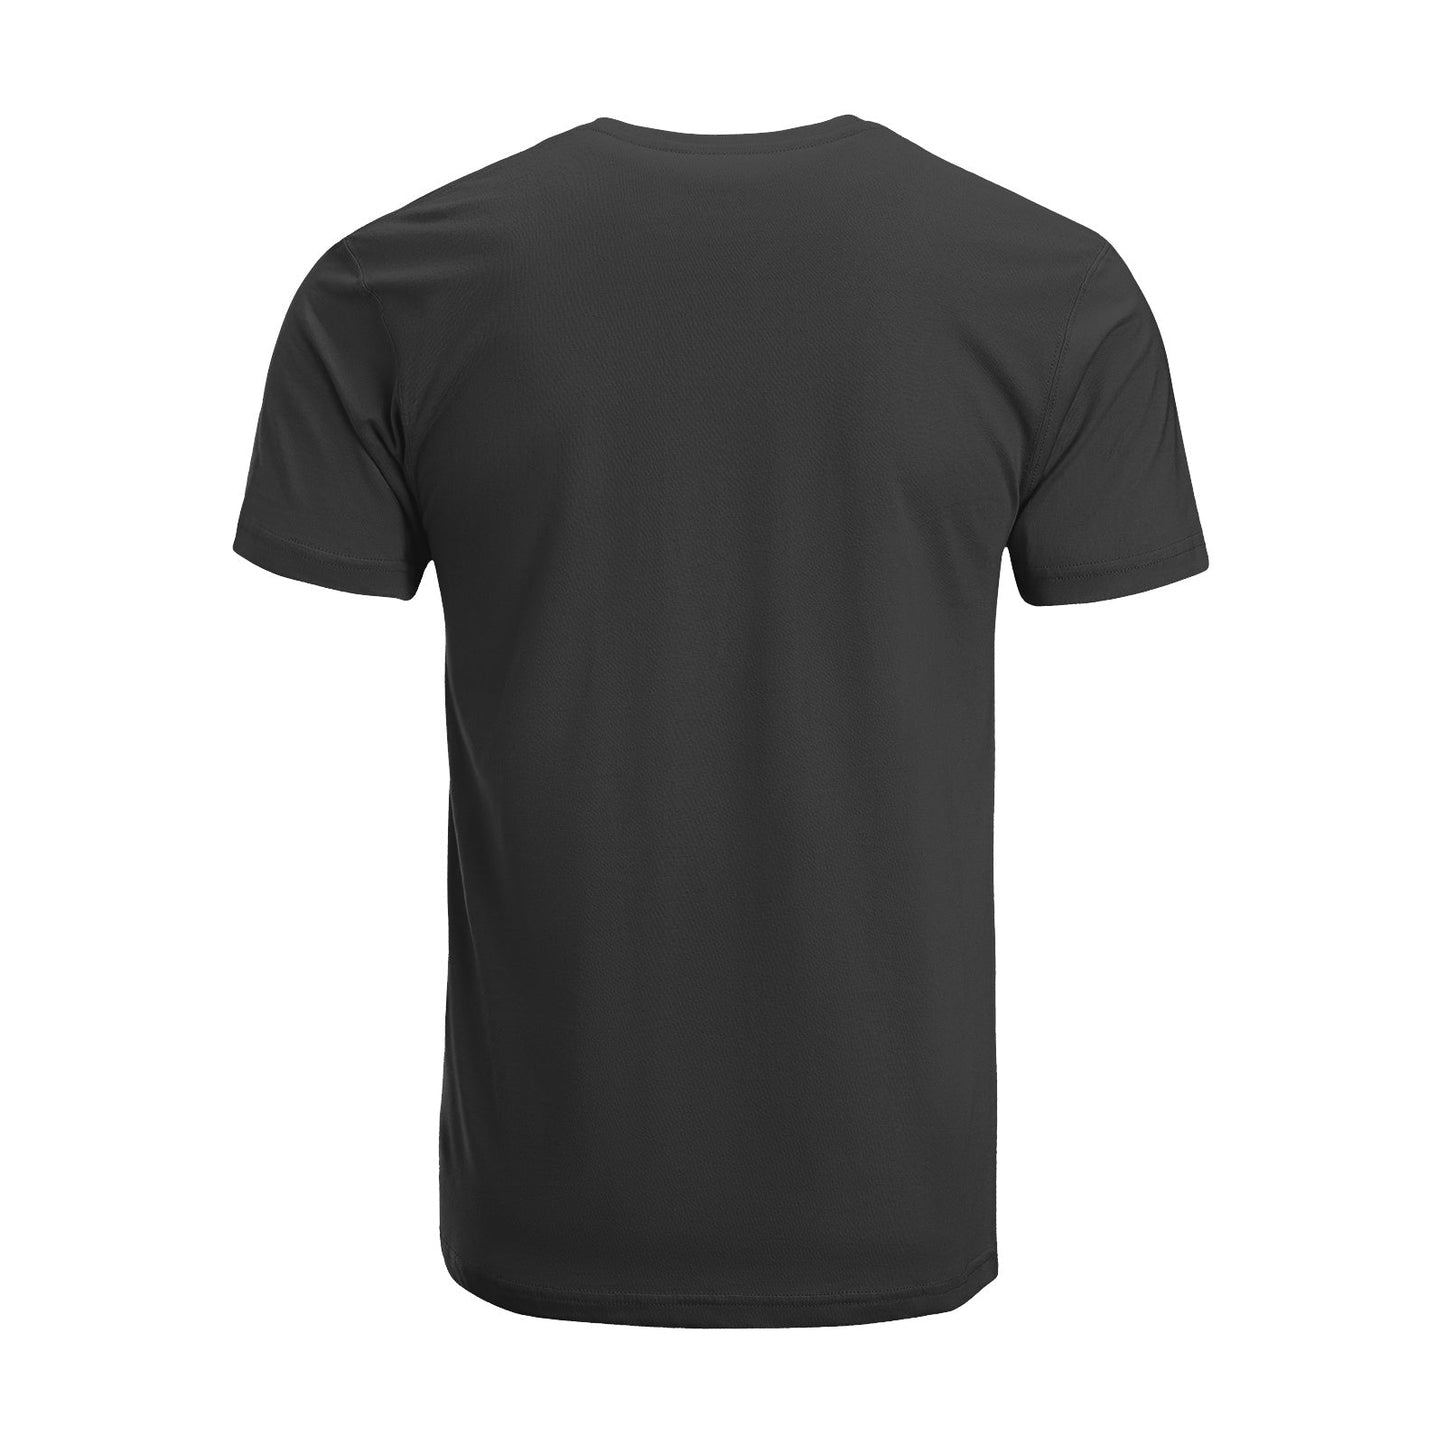 Unisex Short Sleeve Crew Neck Cotton Jersey T-Shirt CAT 02 - Tara-Outfits.com